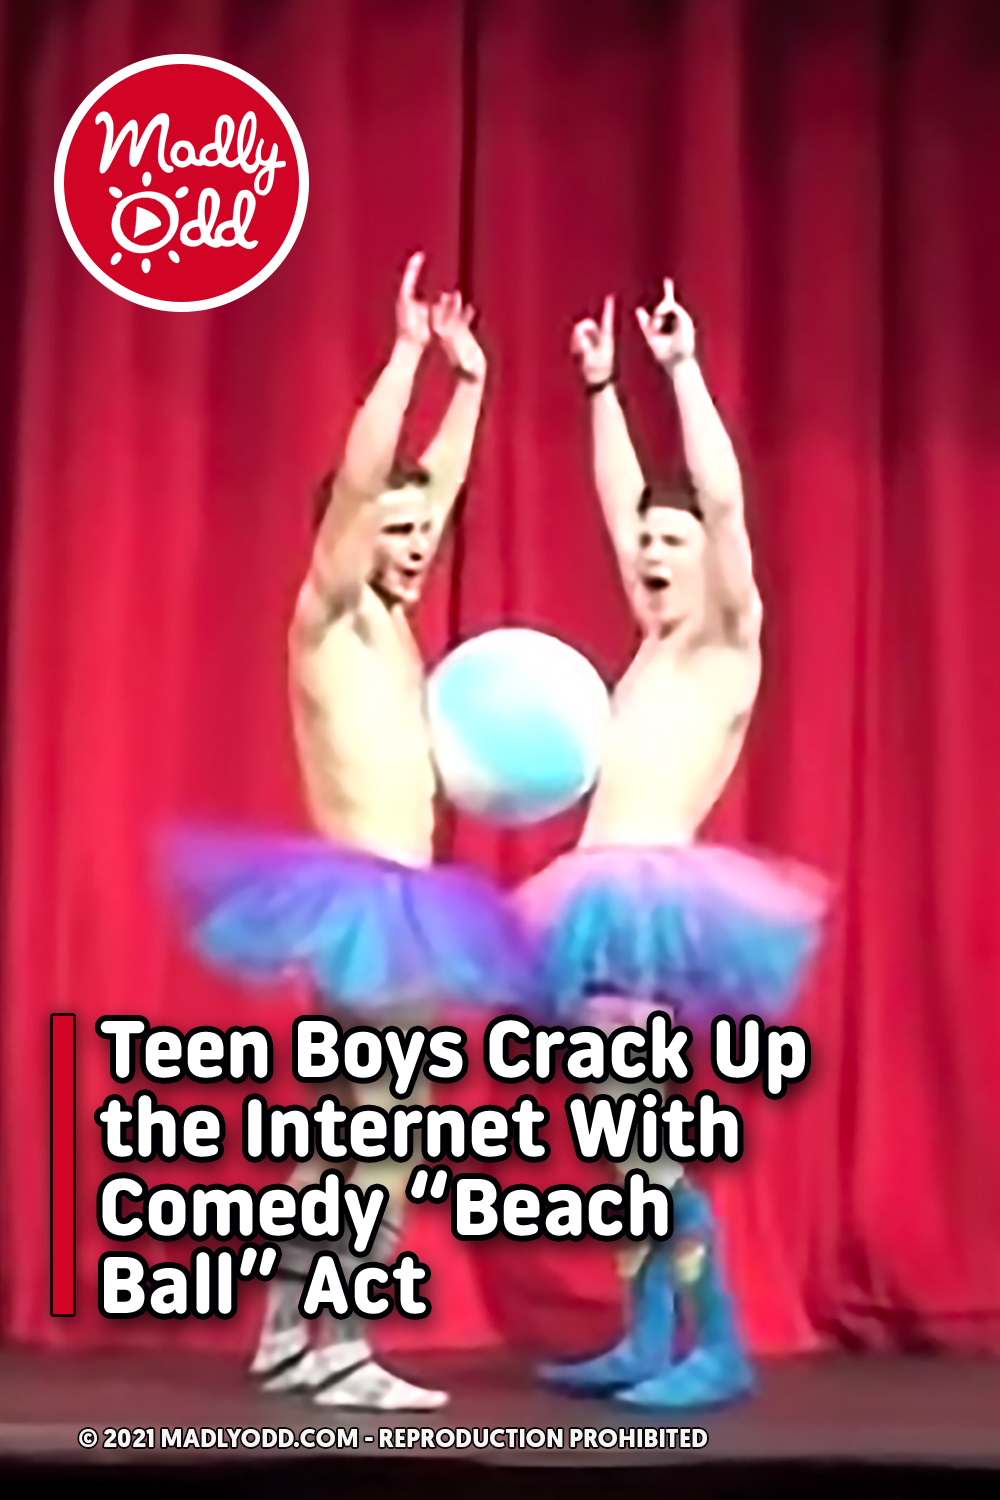 Teen Boys Crack Up the Internet With Comedy “Beach Ball” Act